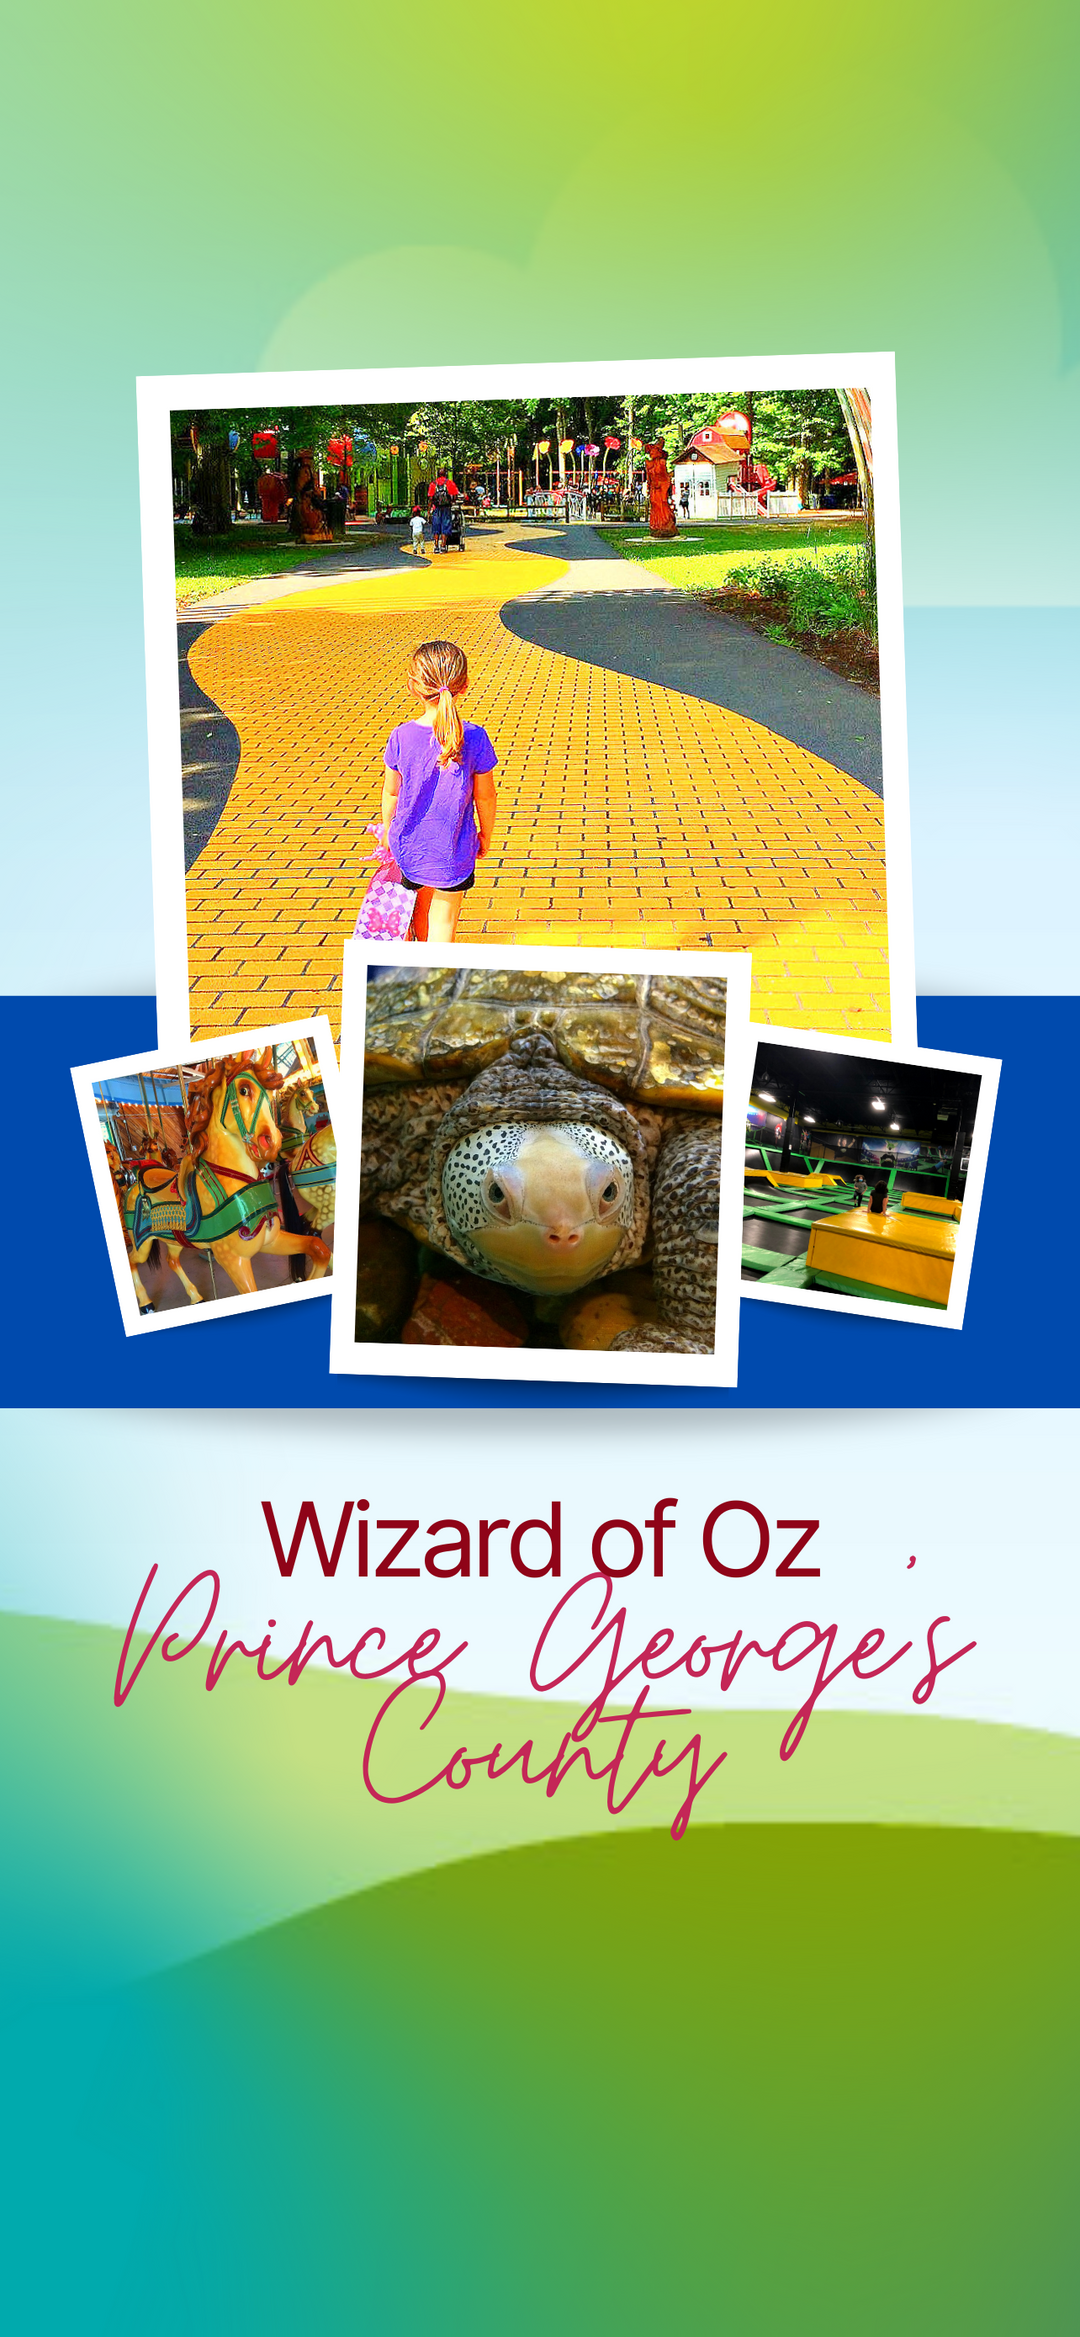 Wizard Of Oz Playground Day Trip Itinerary